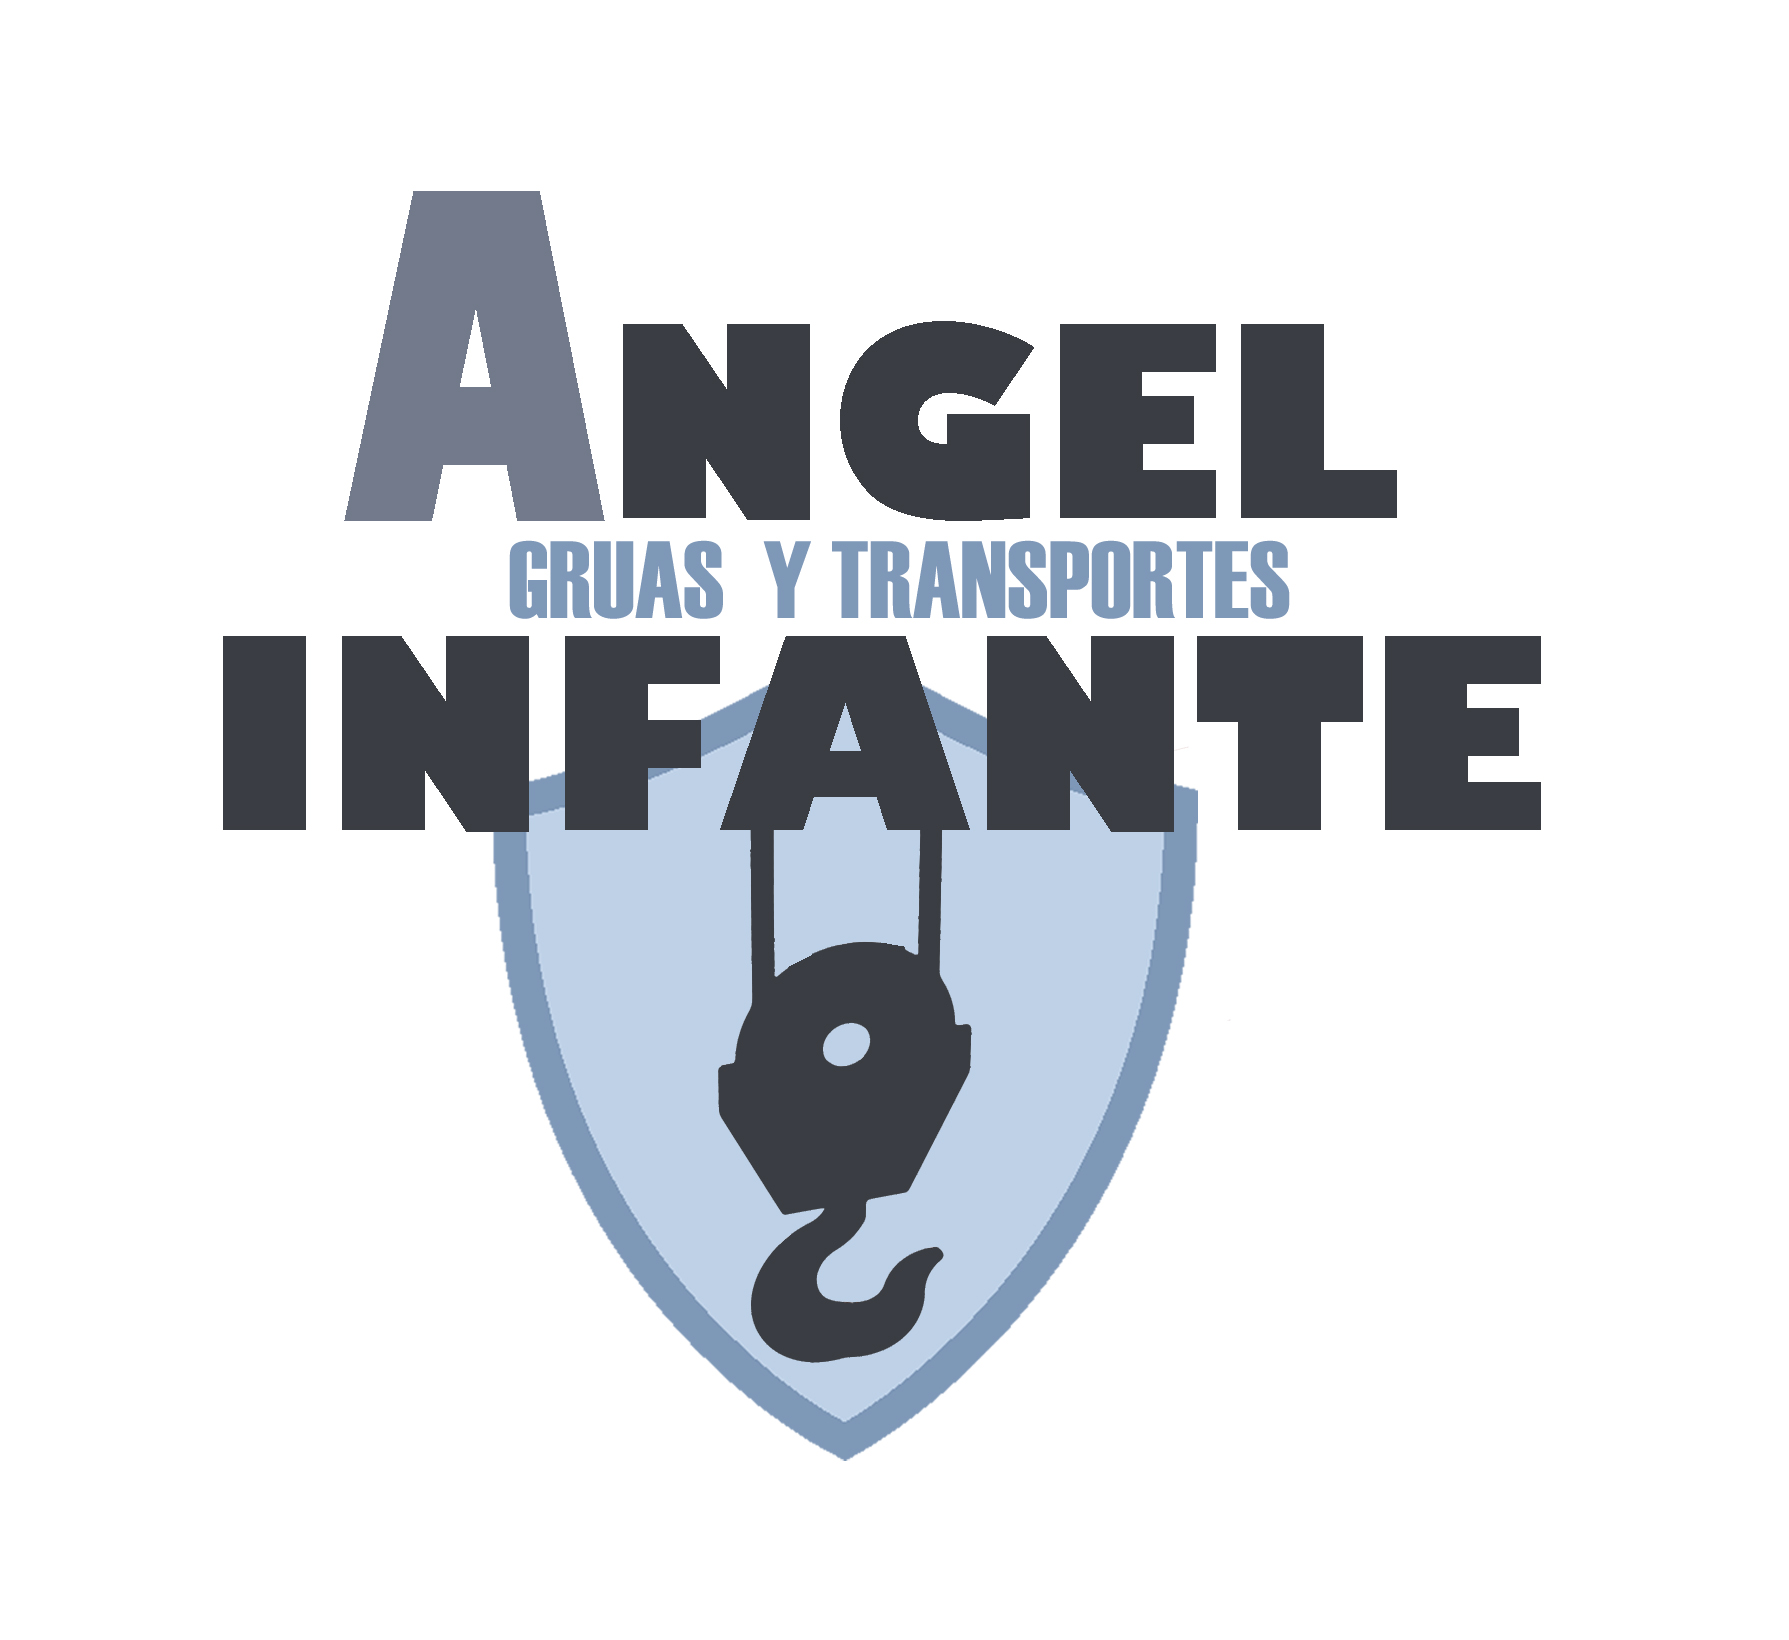 Ángel Infante Grúas y Transportes